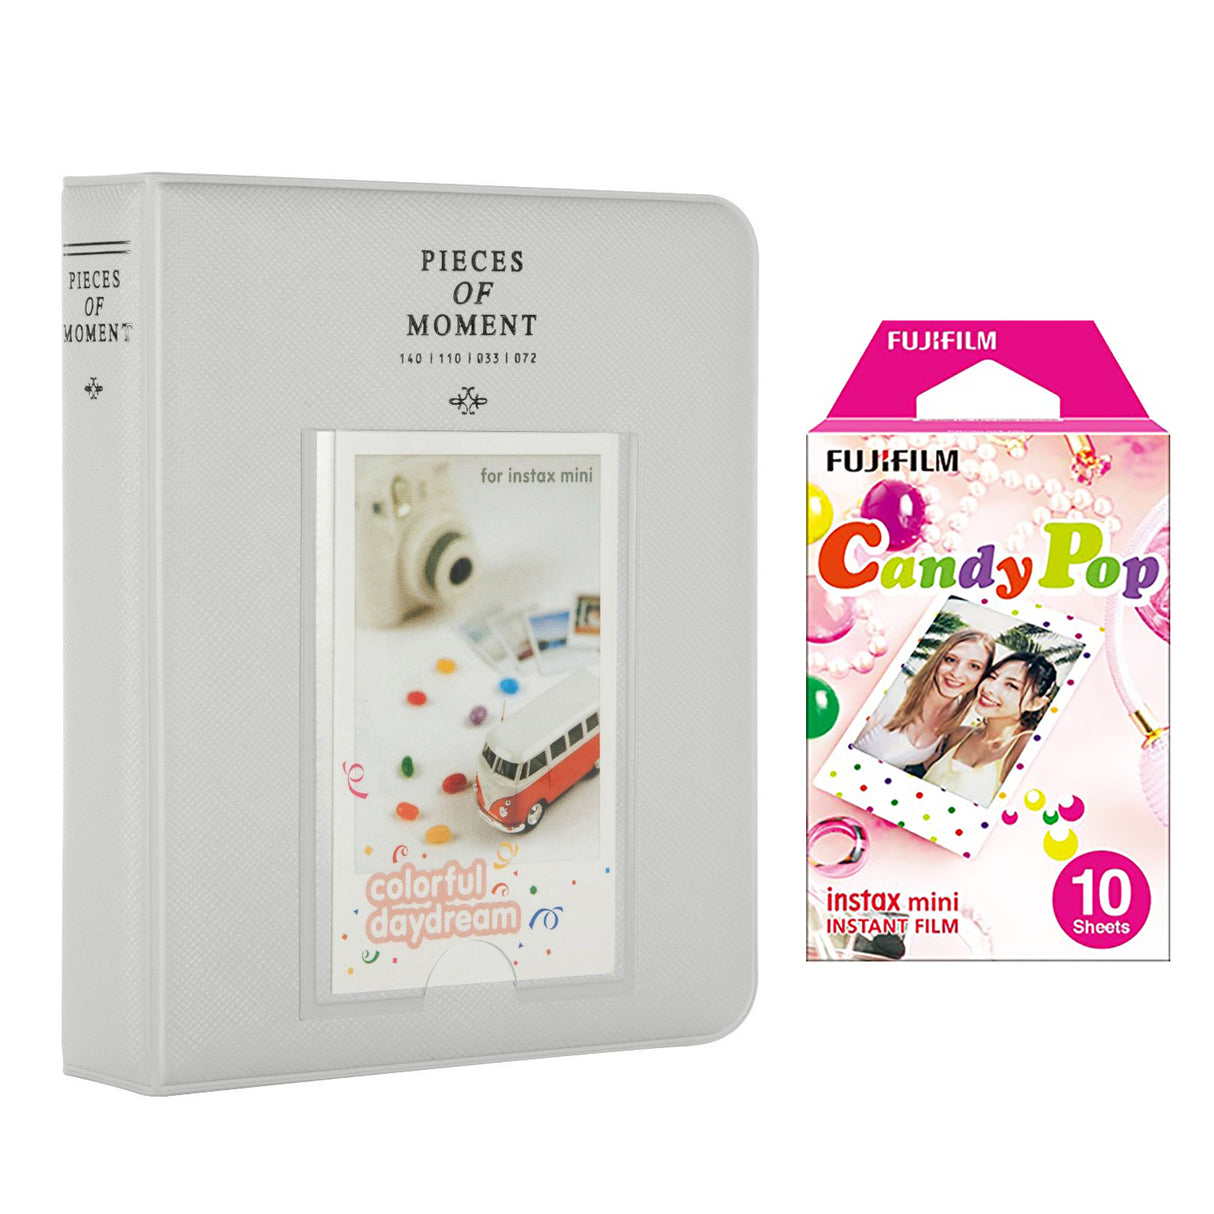 Fujifilm Instax Mini 10X1 candy pop Instant Film with Instax Time Photo Album 64 Sheets Smokey white